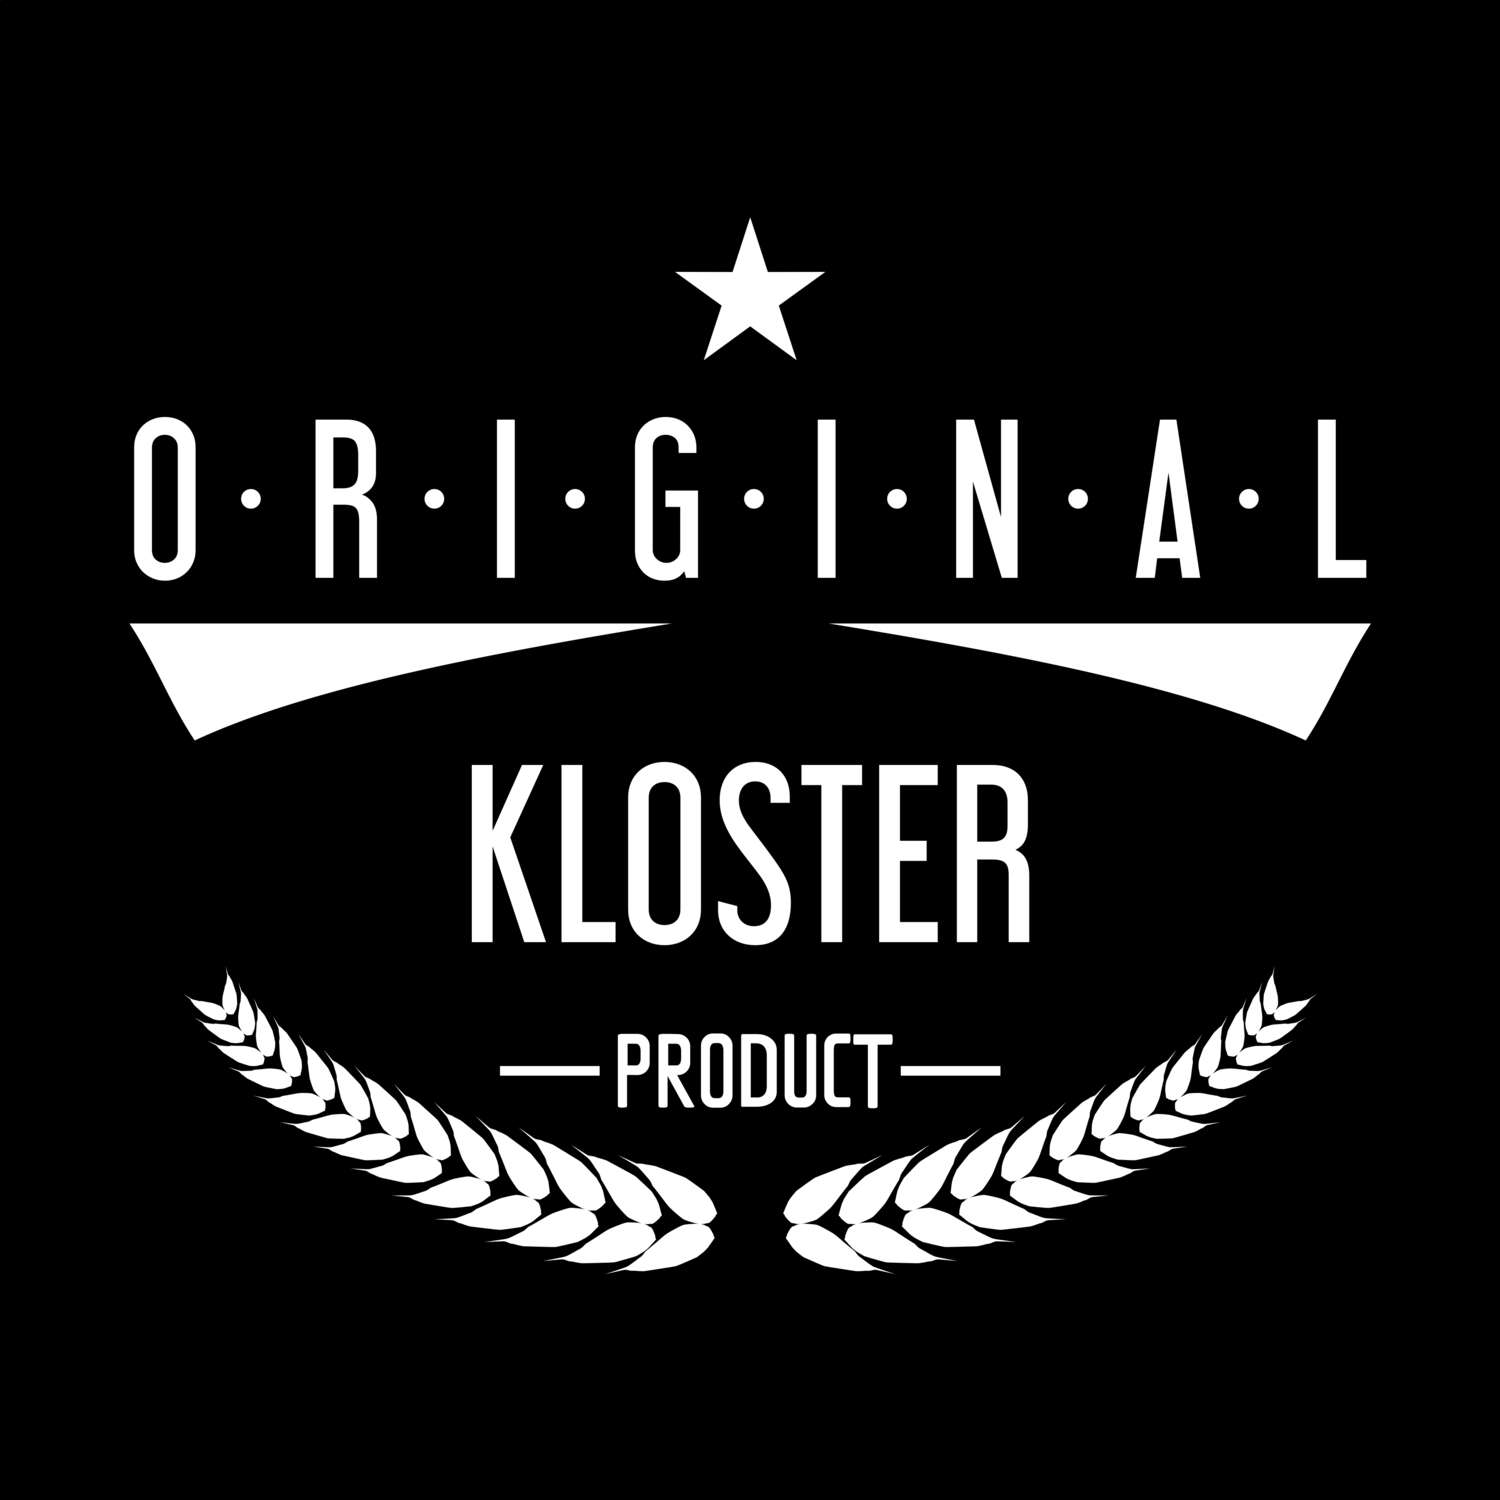 Kloster T-Shirt »Original Product«